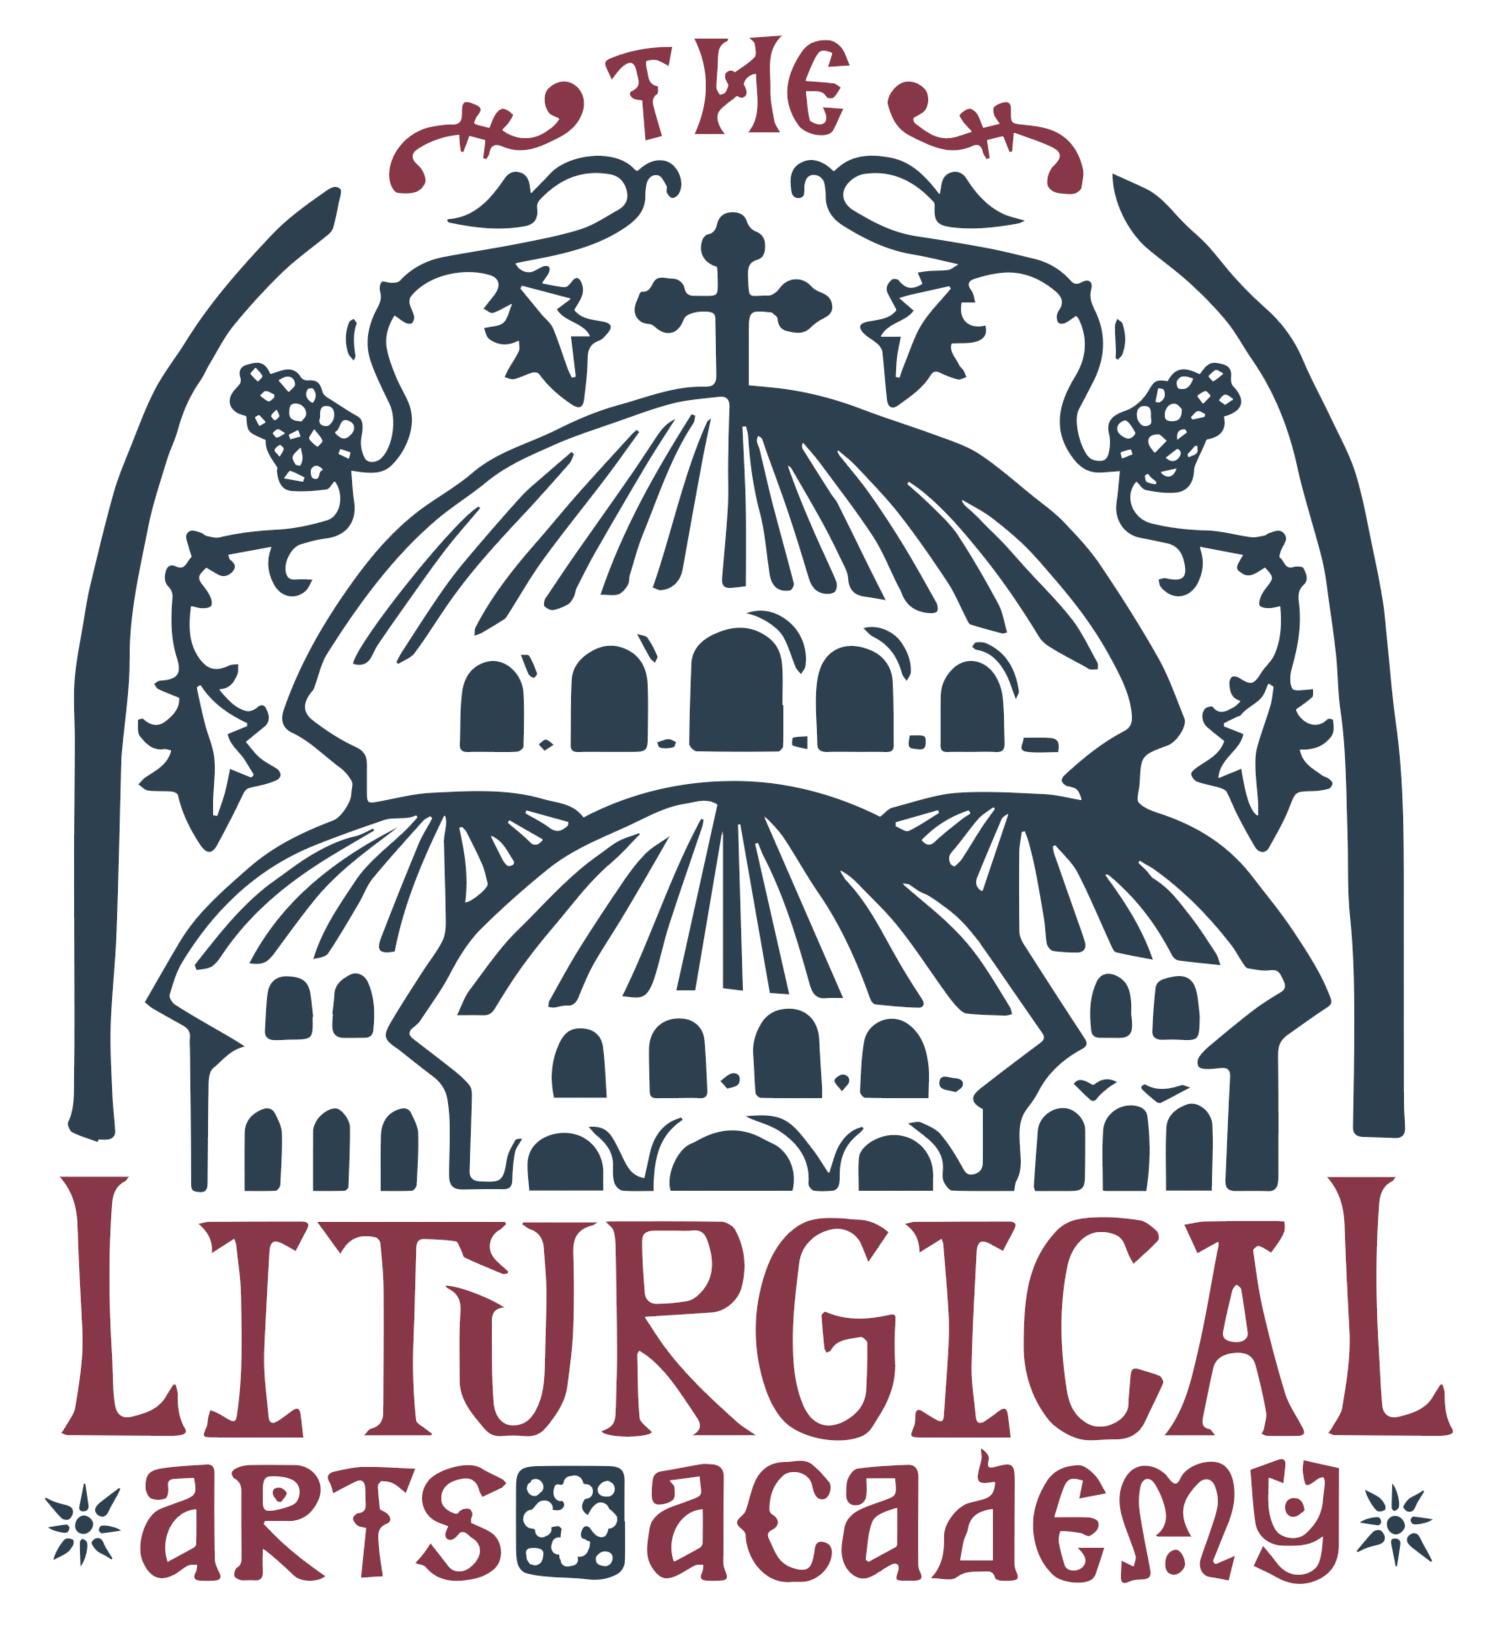 The Liturgical Arts Academy